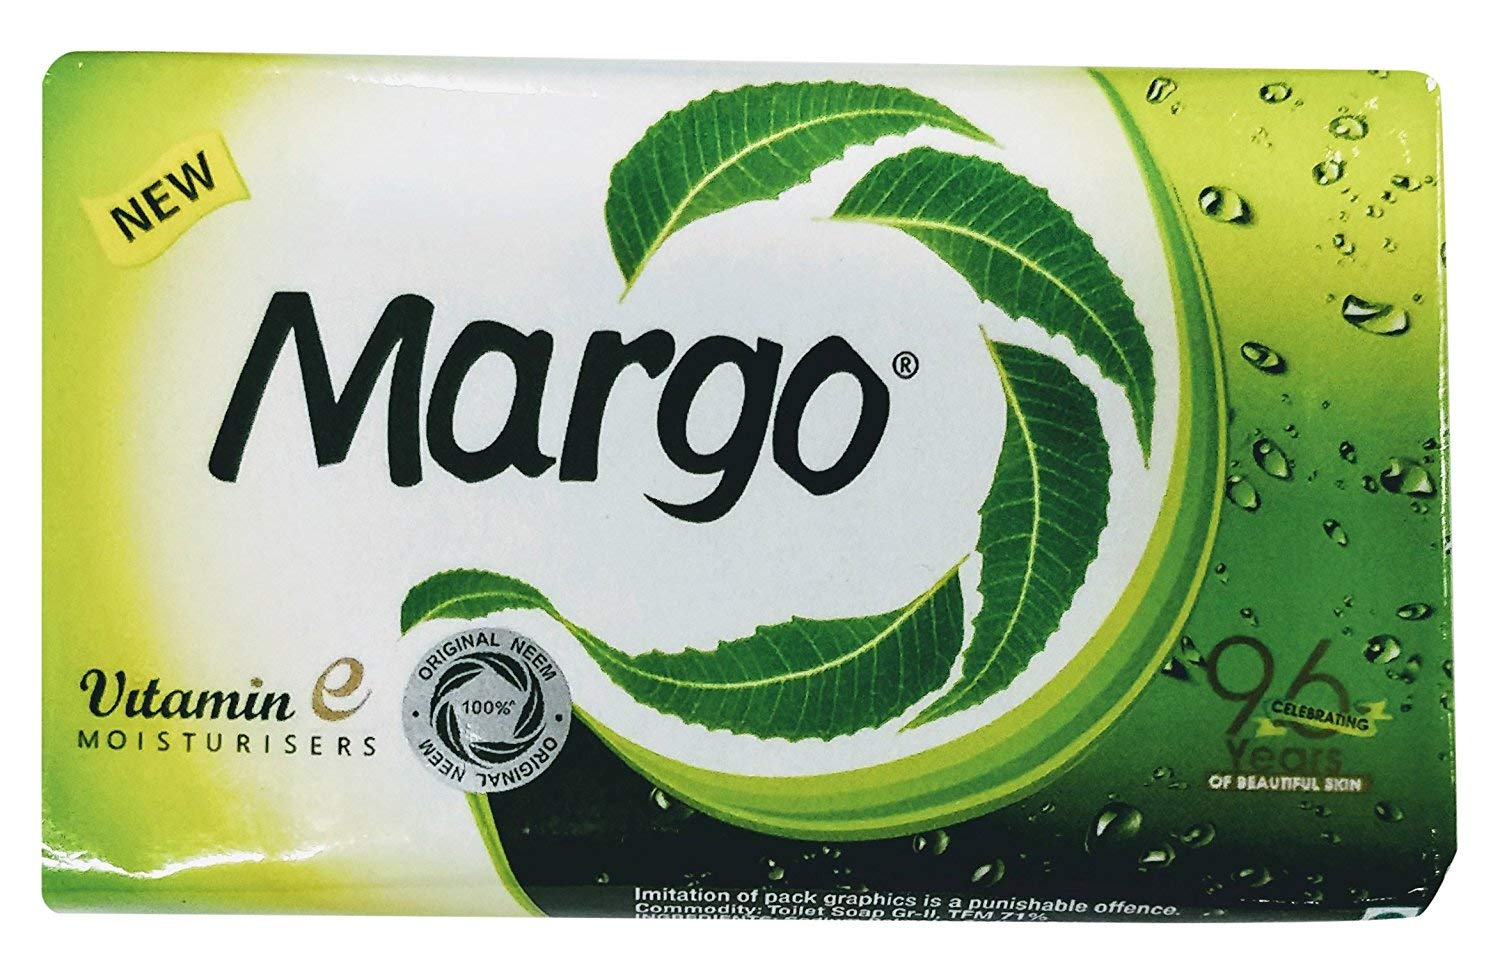 MARGO 4x125g SOAPS